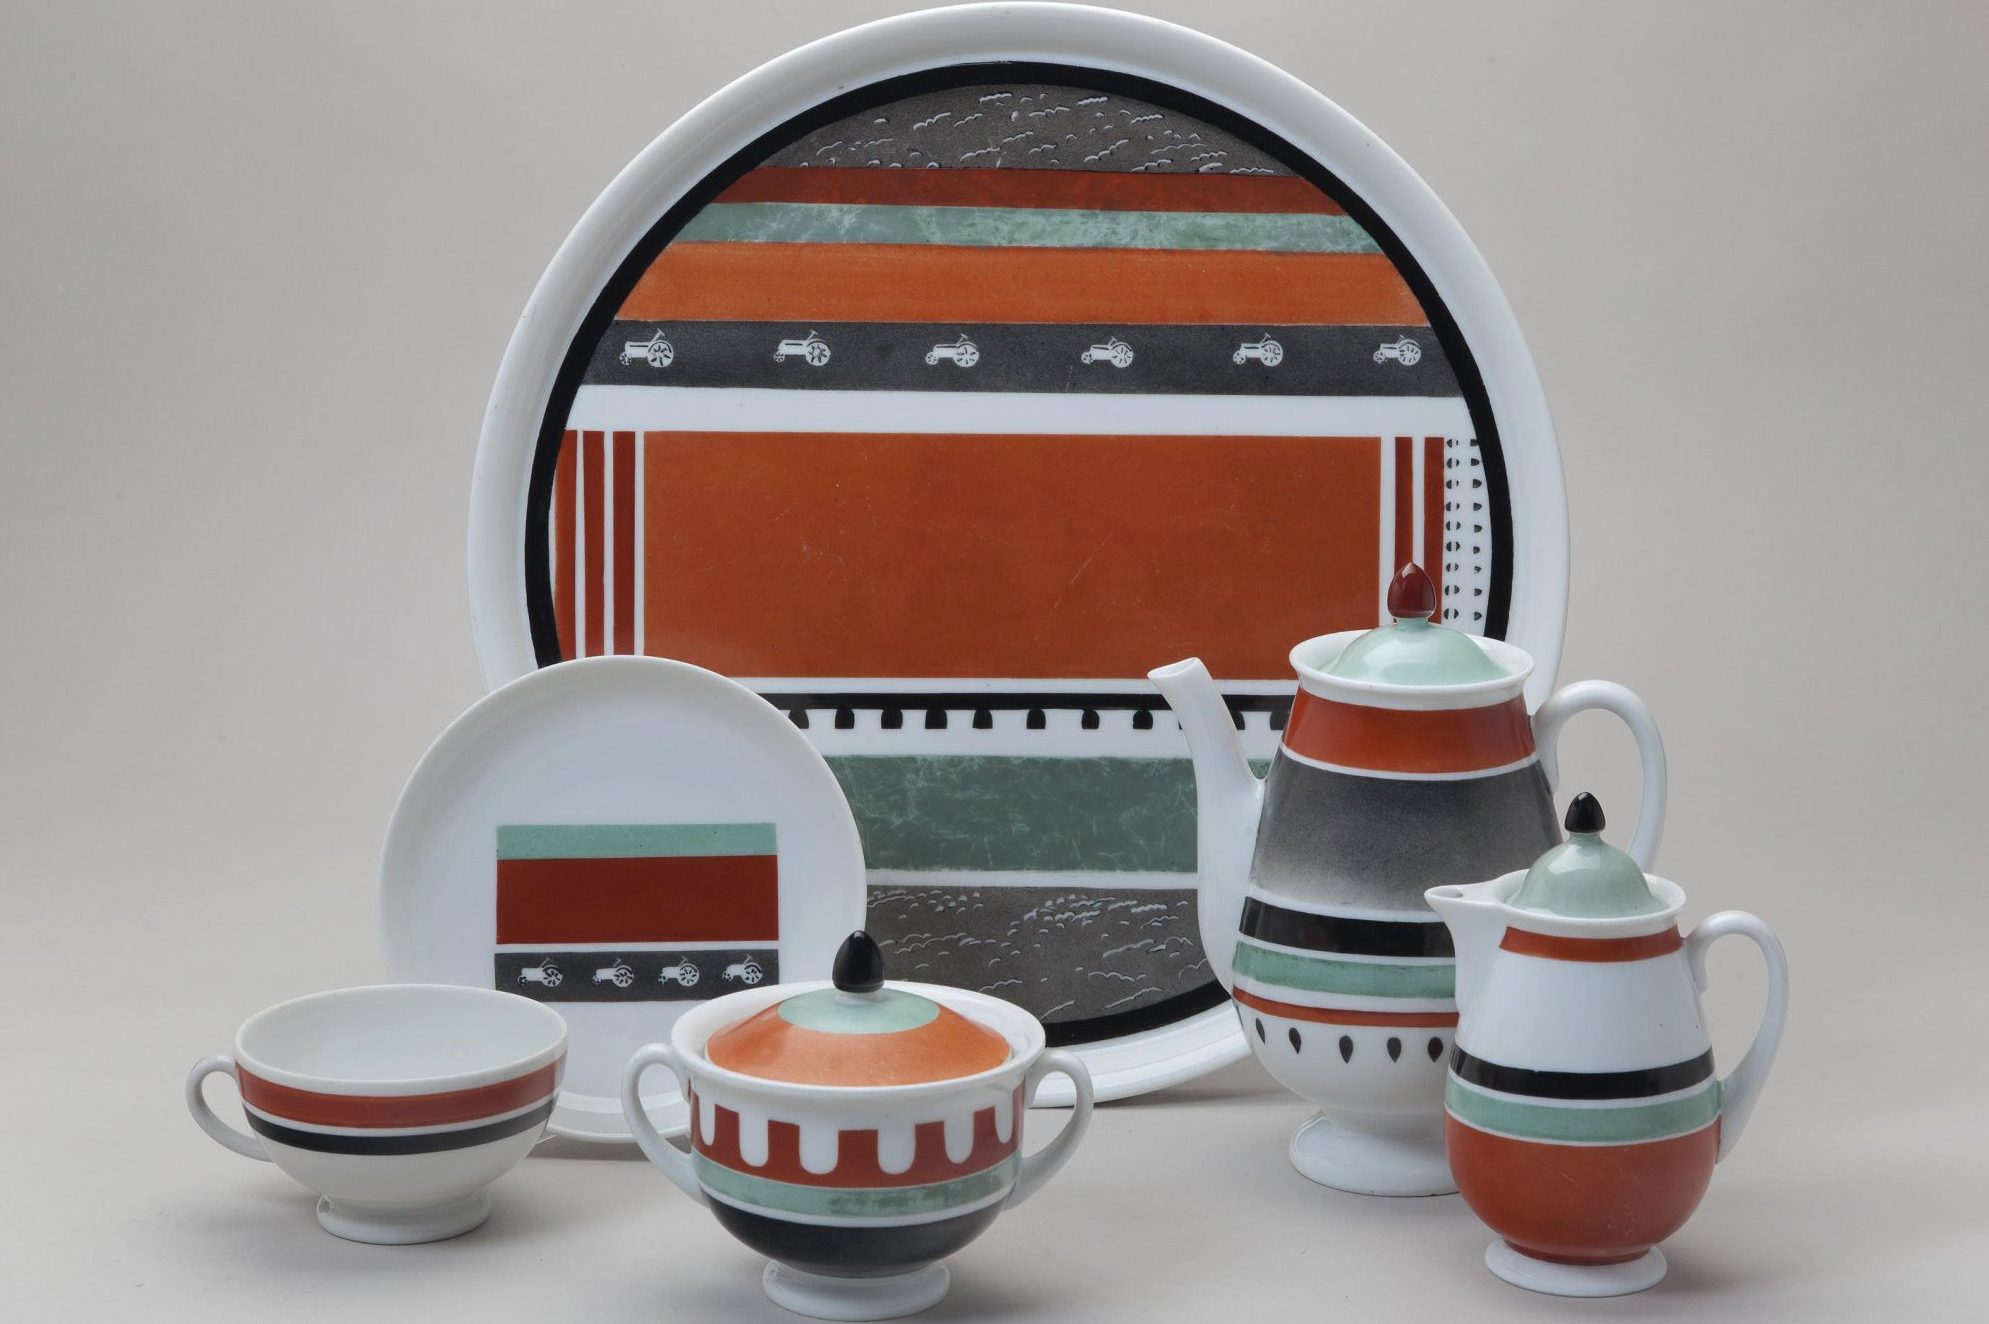 Soviet porcelain tea set "Tractors". Suprematism. Nikolai Suetin. Lomonosov State Porcelain factory, St Petersburg, USSR